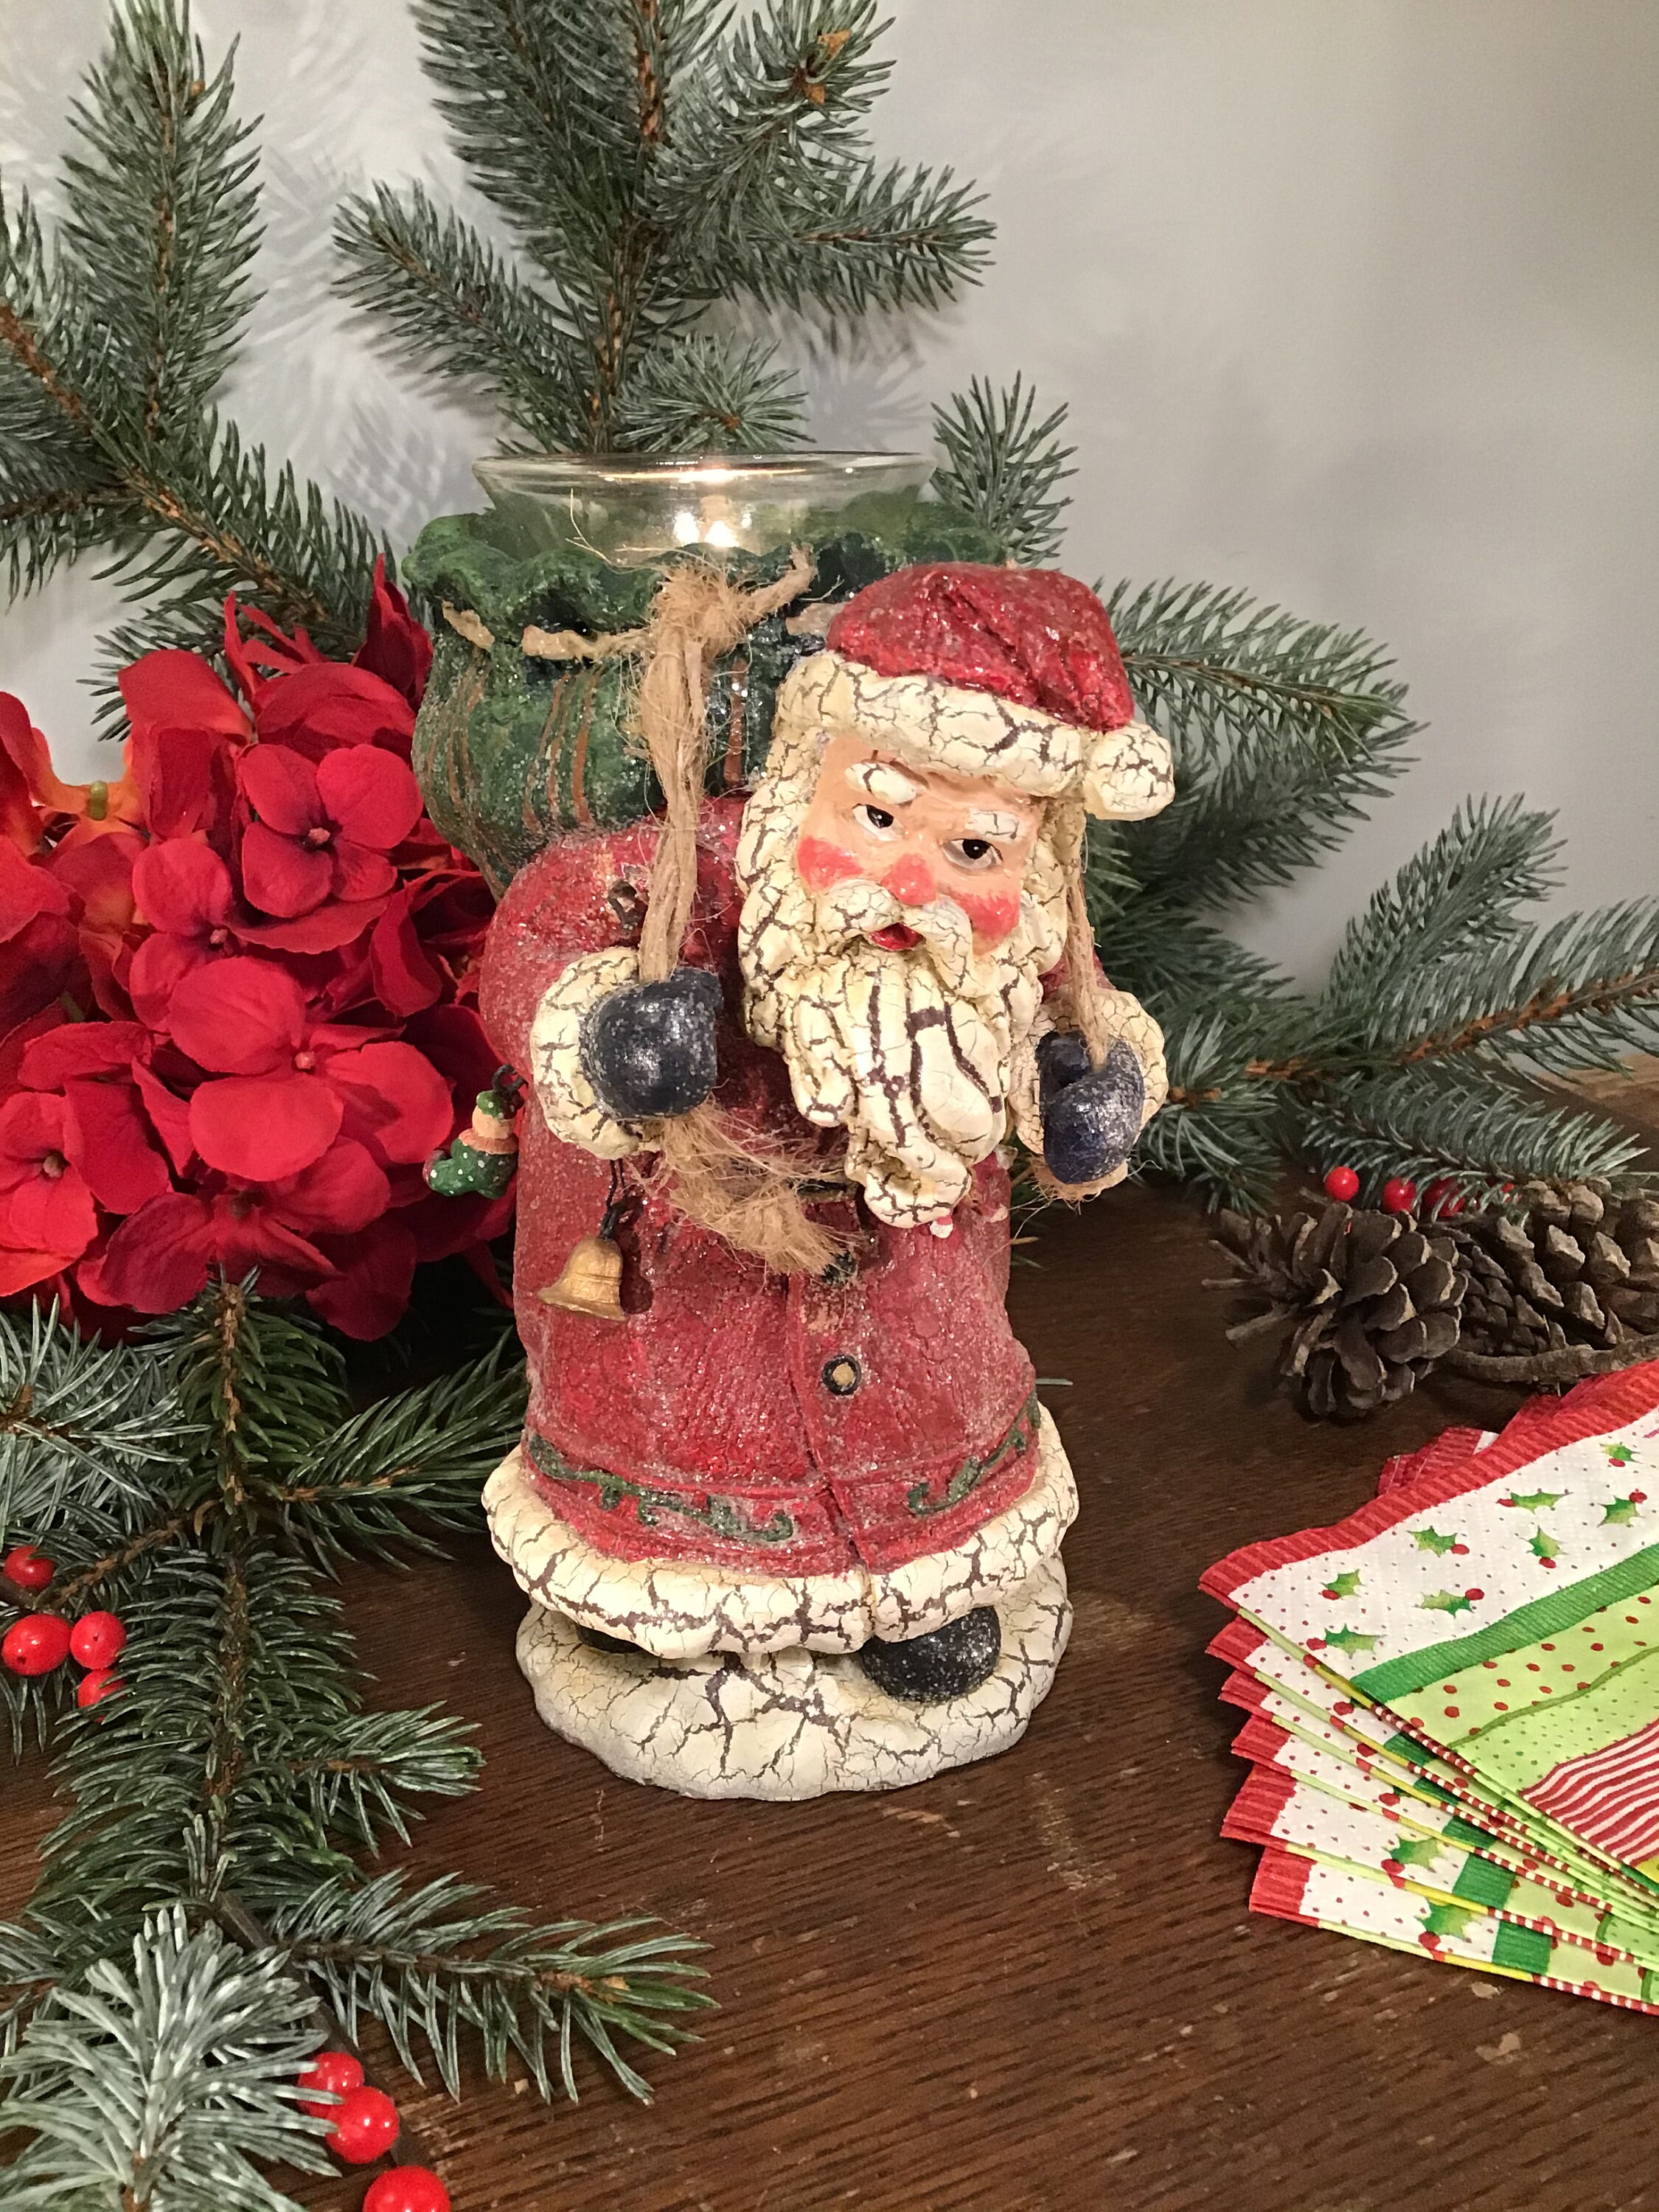 Premier 29cm Animated Musical Singing Musical Santa Moving Hat Christmas Decoration 